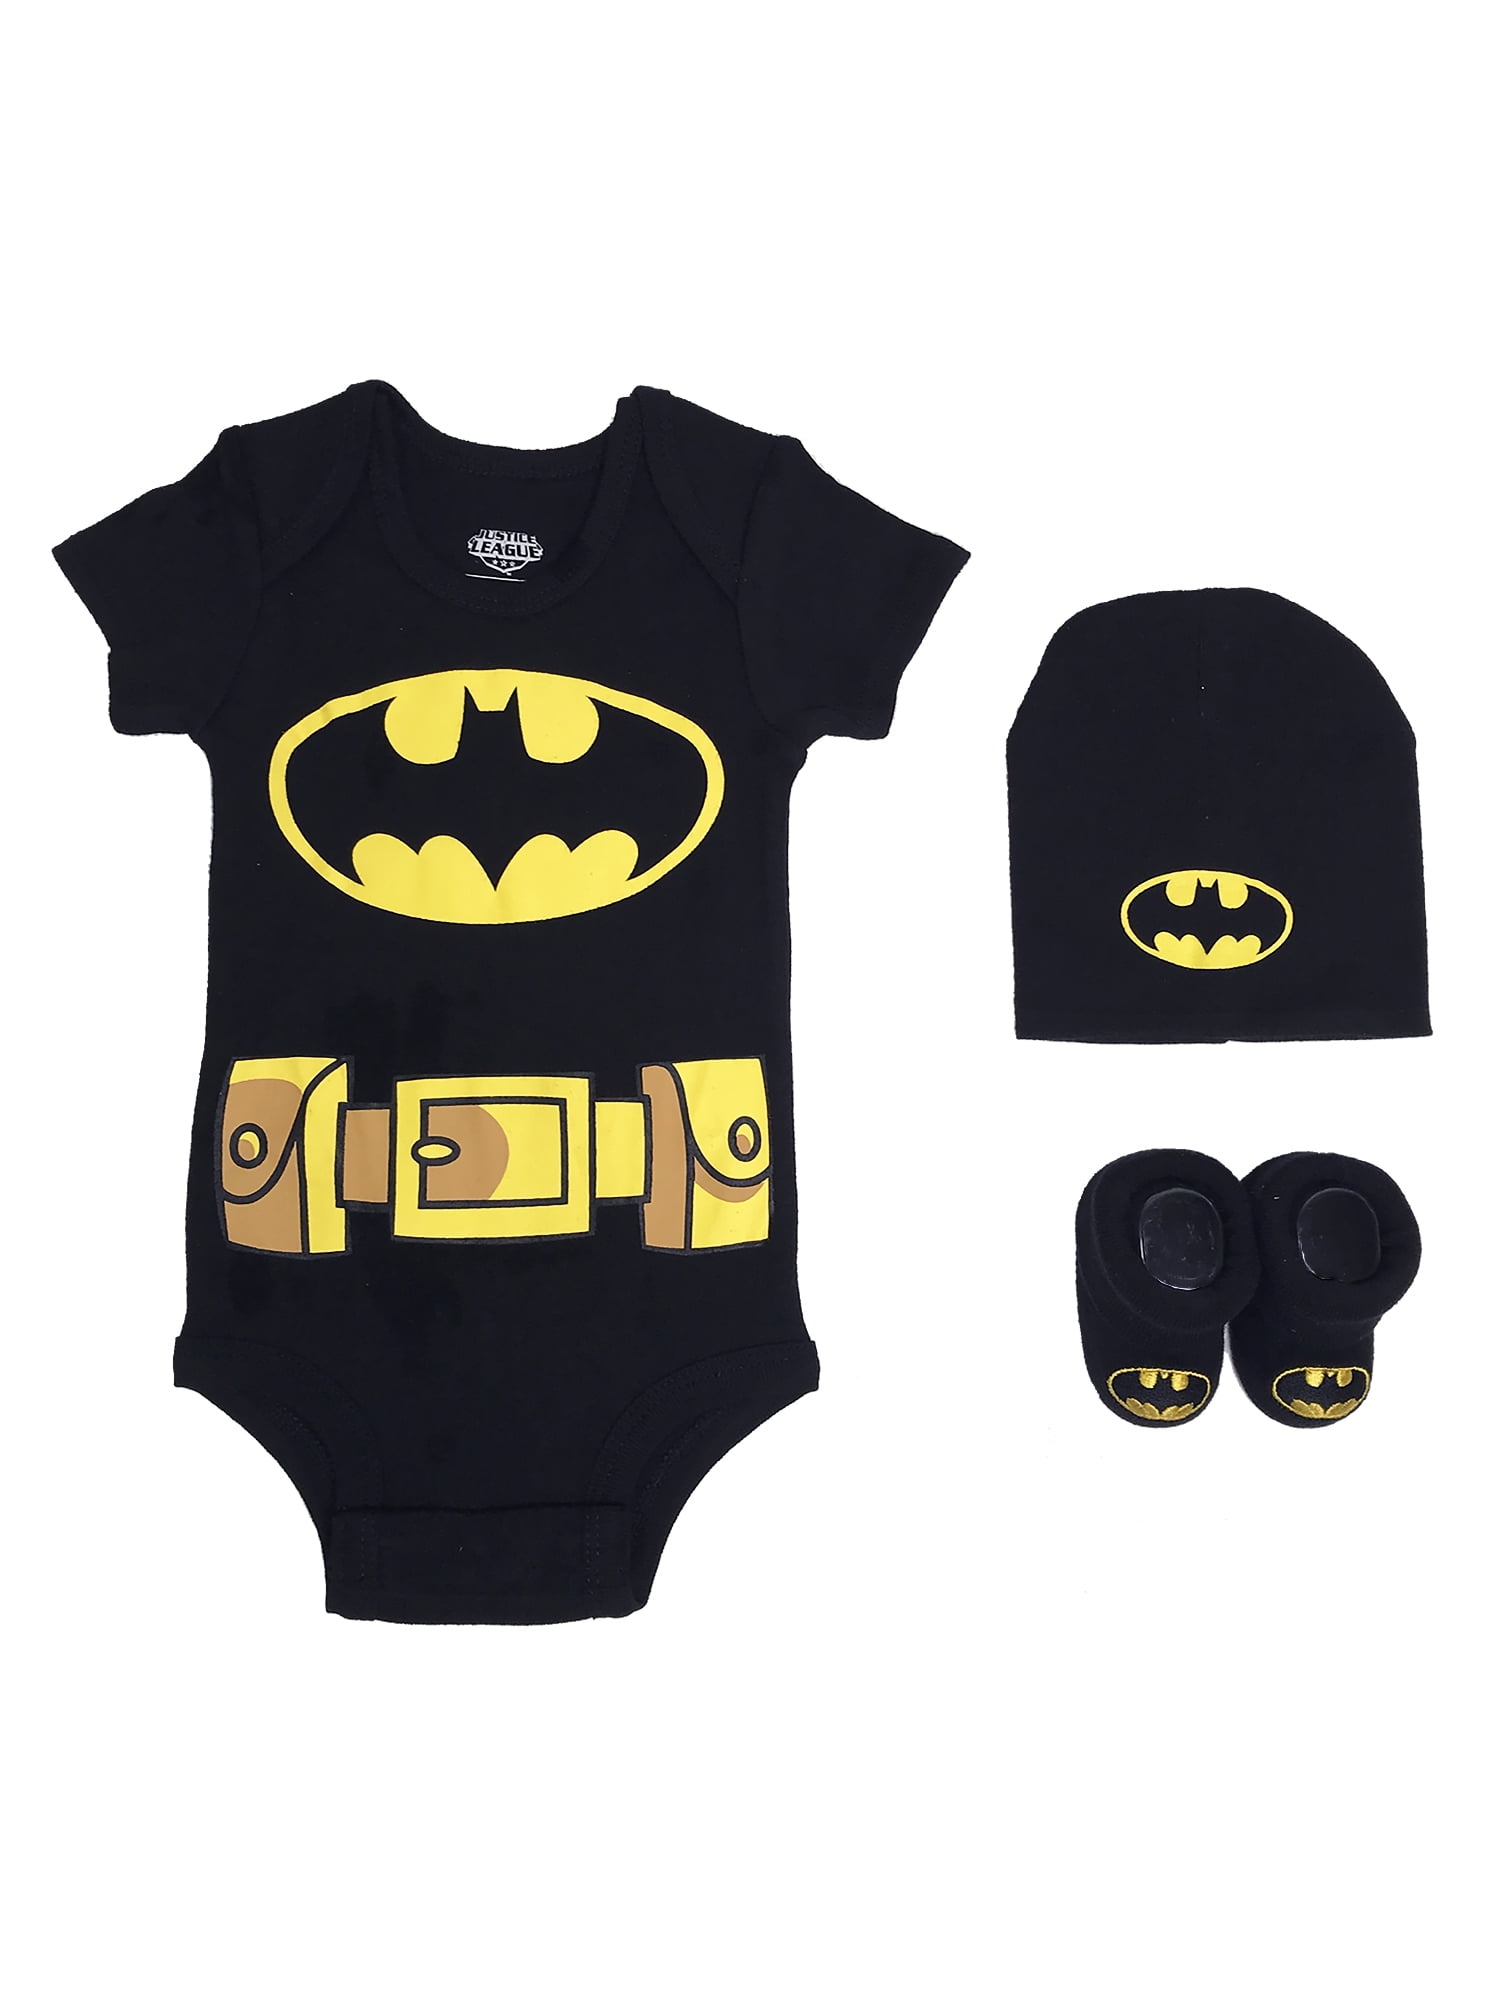 Baby Boy Batman Costume Short Sleeve Romper w/Cape size 00/0/1/2 